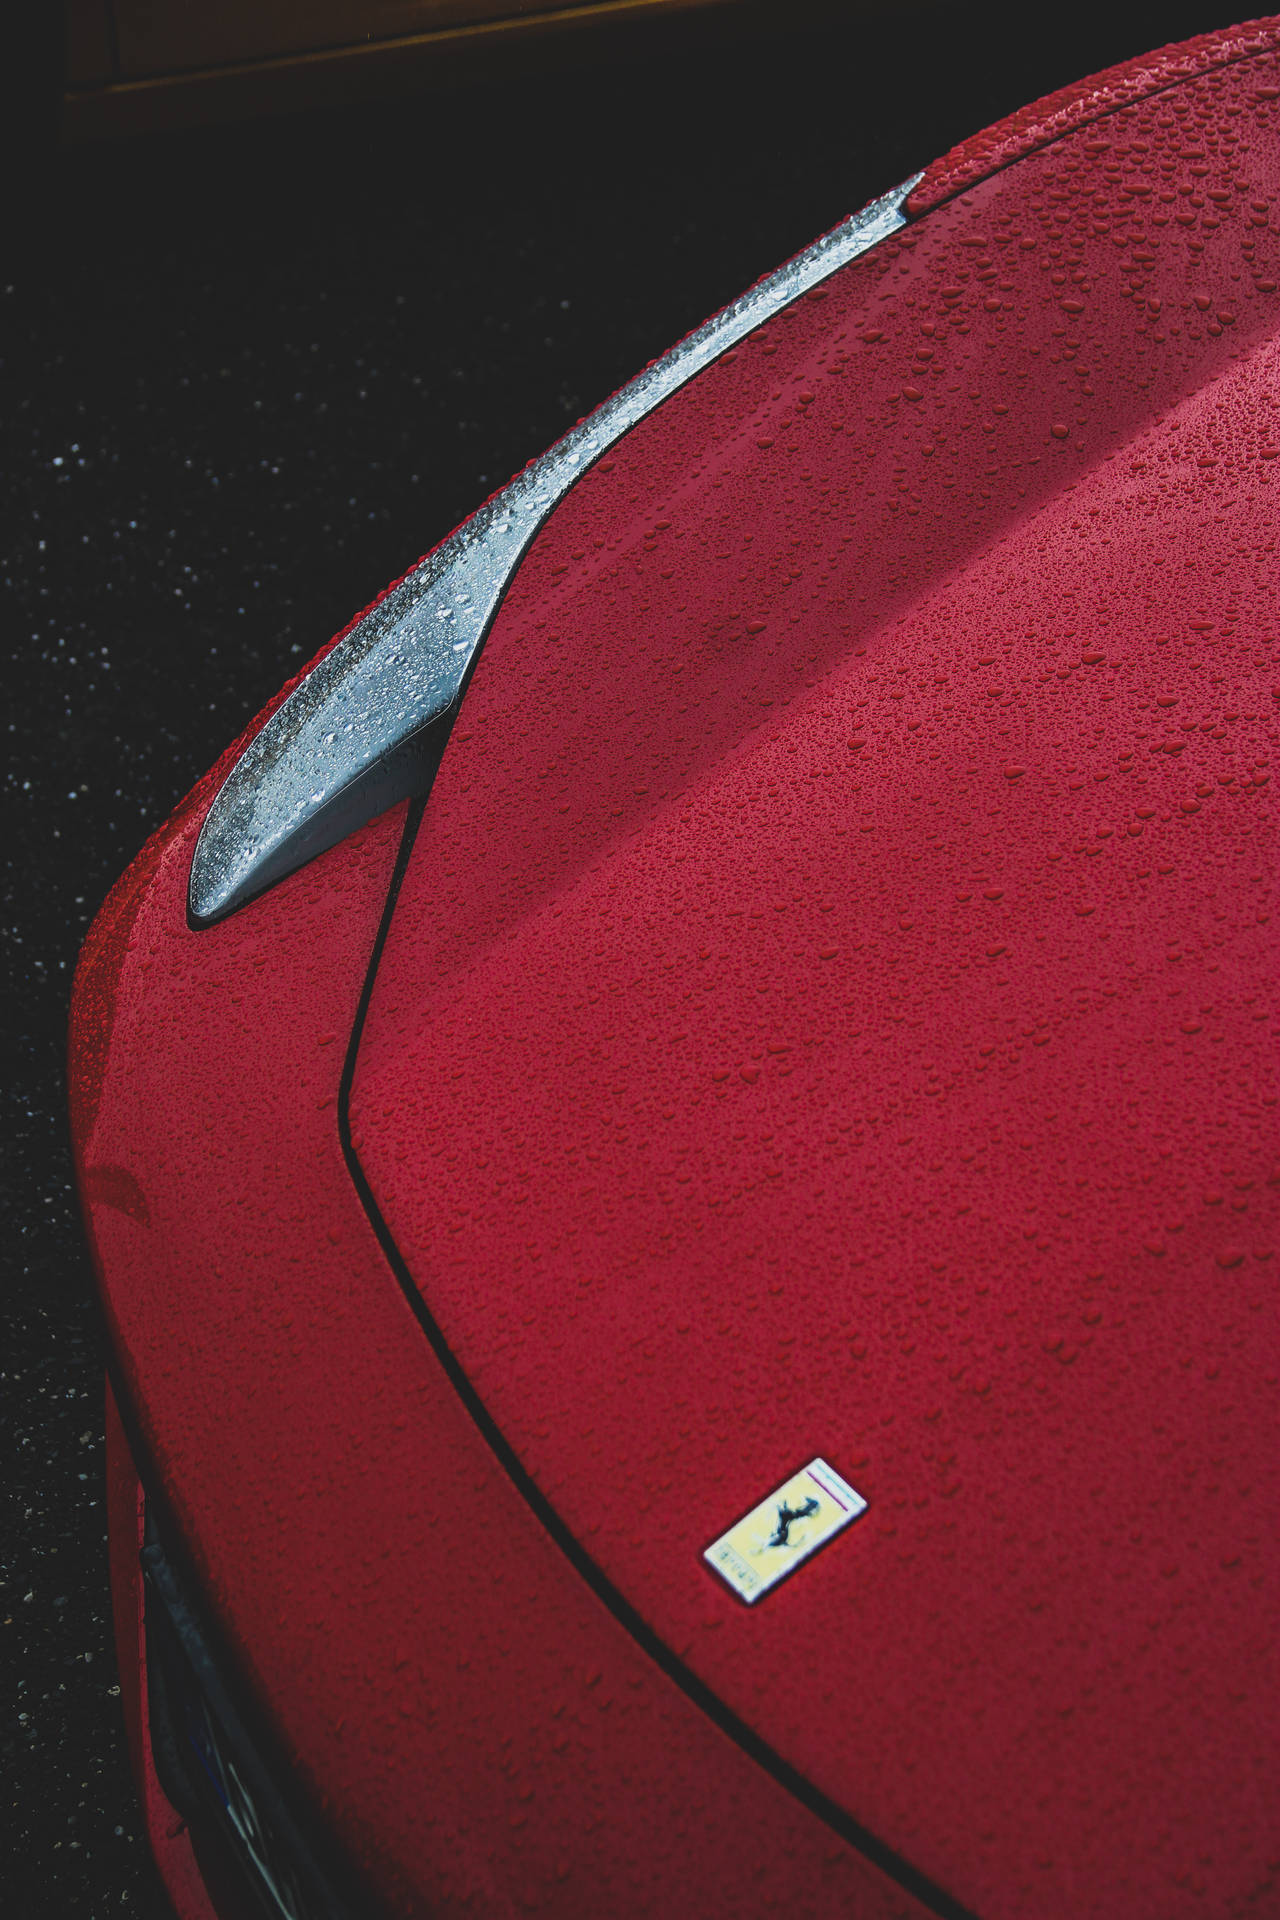 Red Ferrari Hood